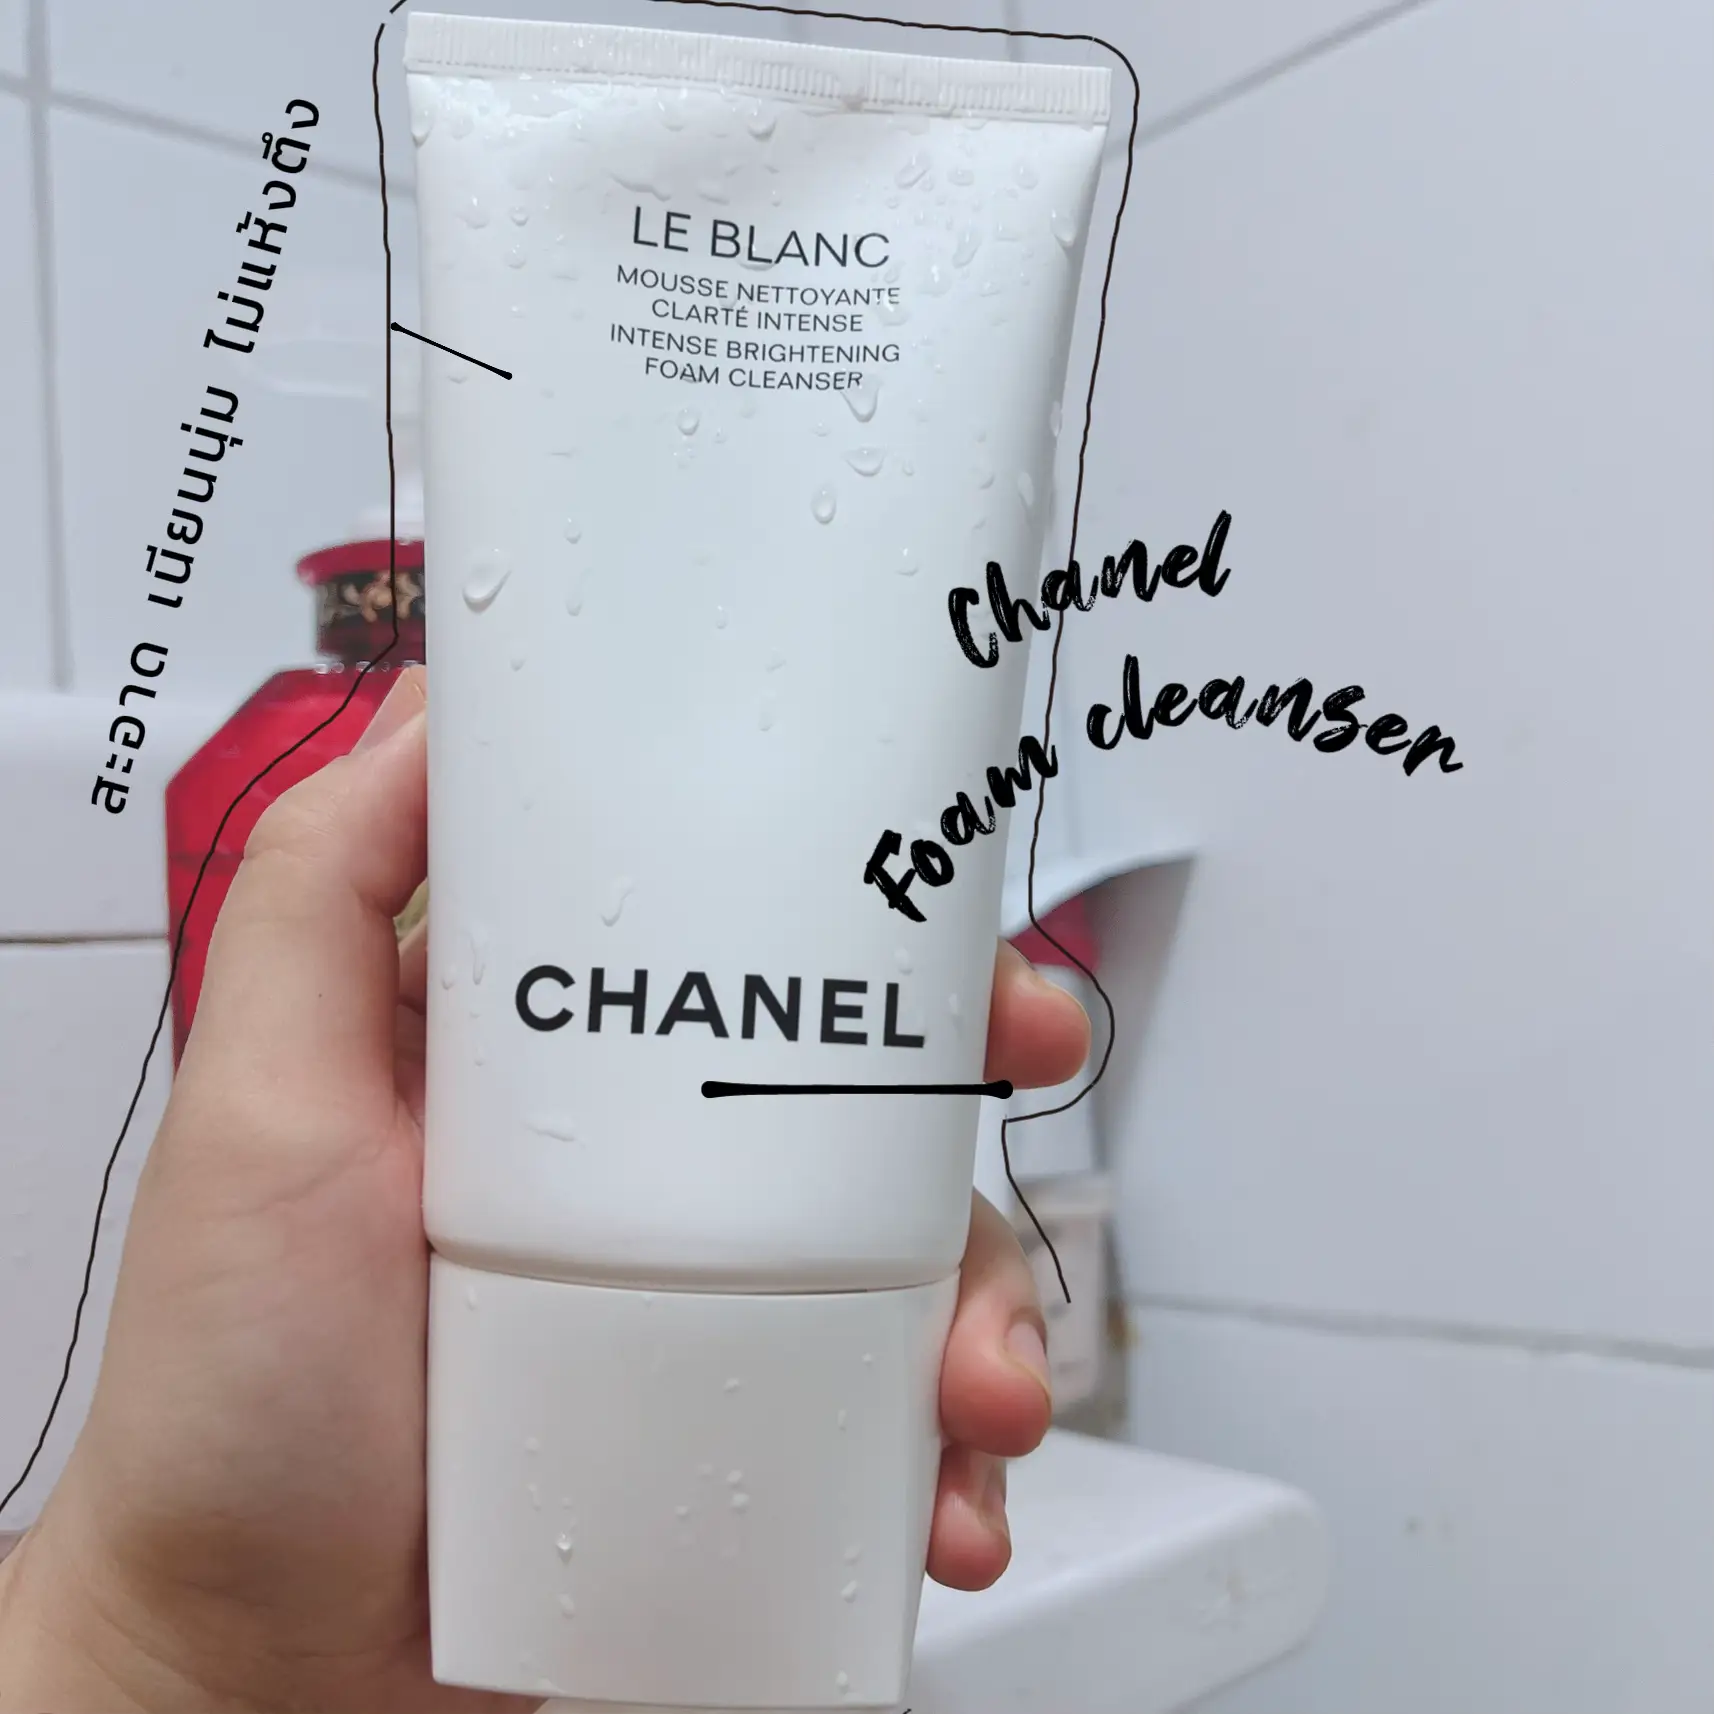 Chanel Chanel Le Blanc Intense Brightening Foam Cleanser - Beauty Review